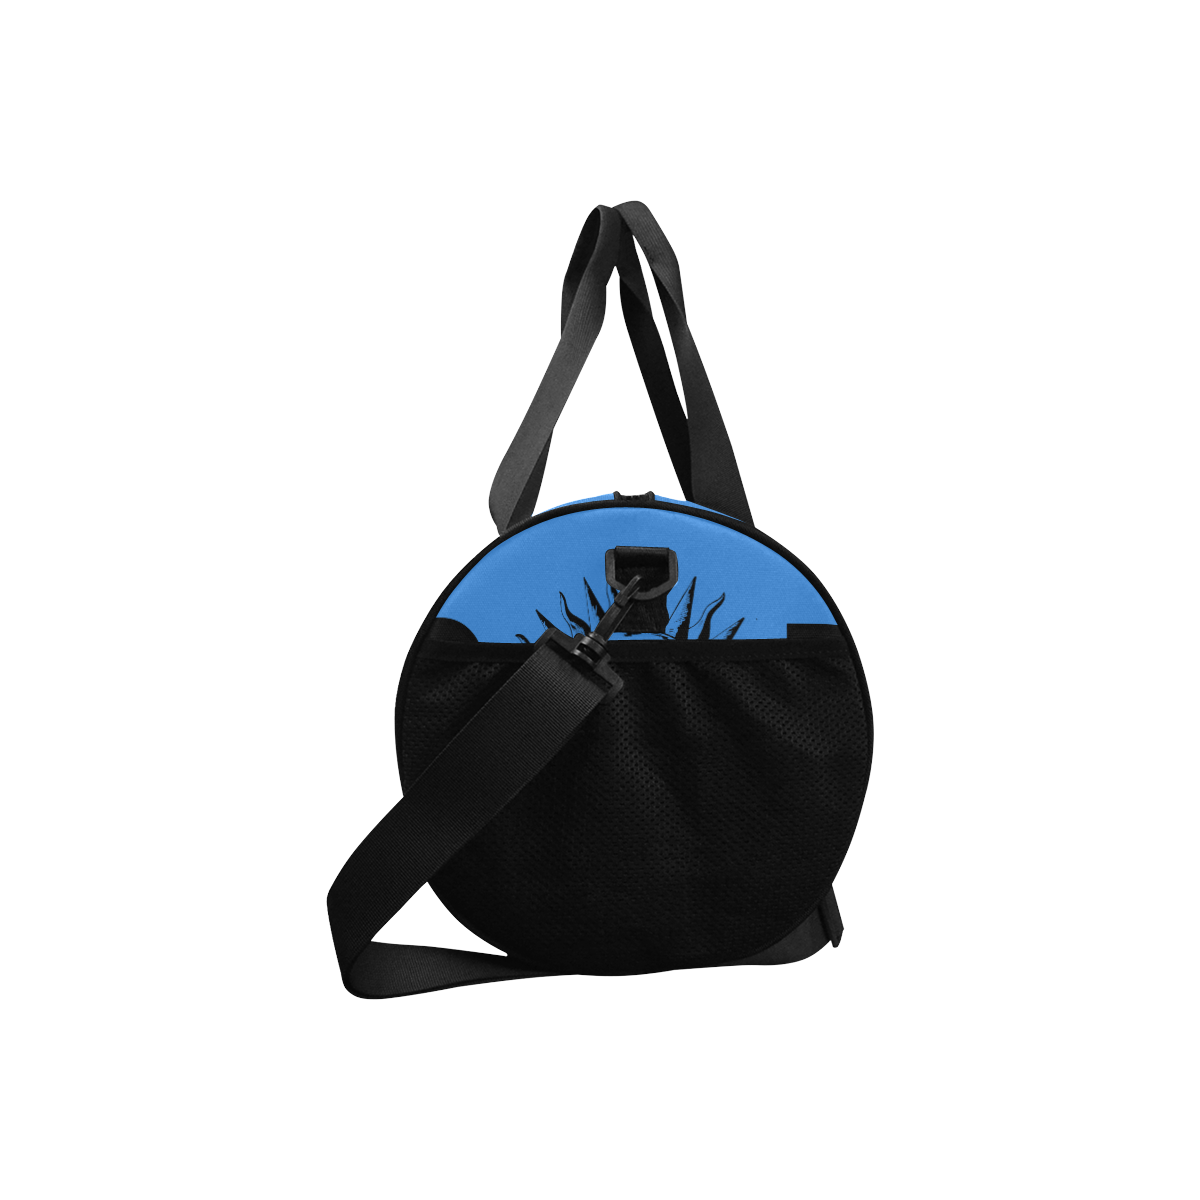 GOD Duffle Bag Shy Blue & Black Duffle Bag (Model 1679)